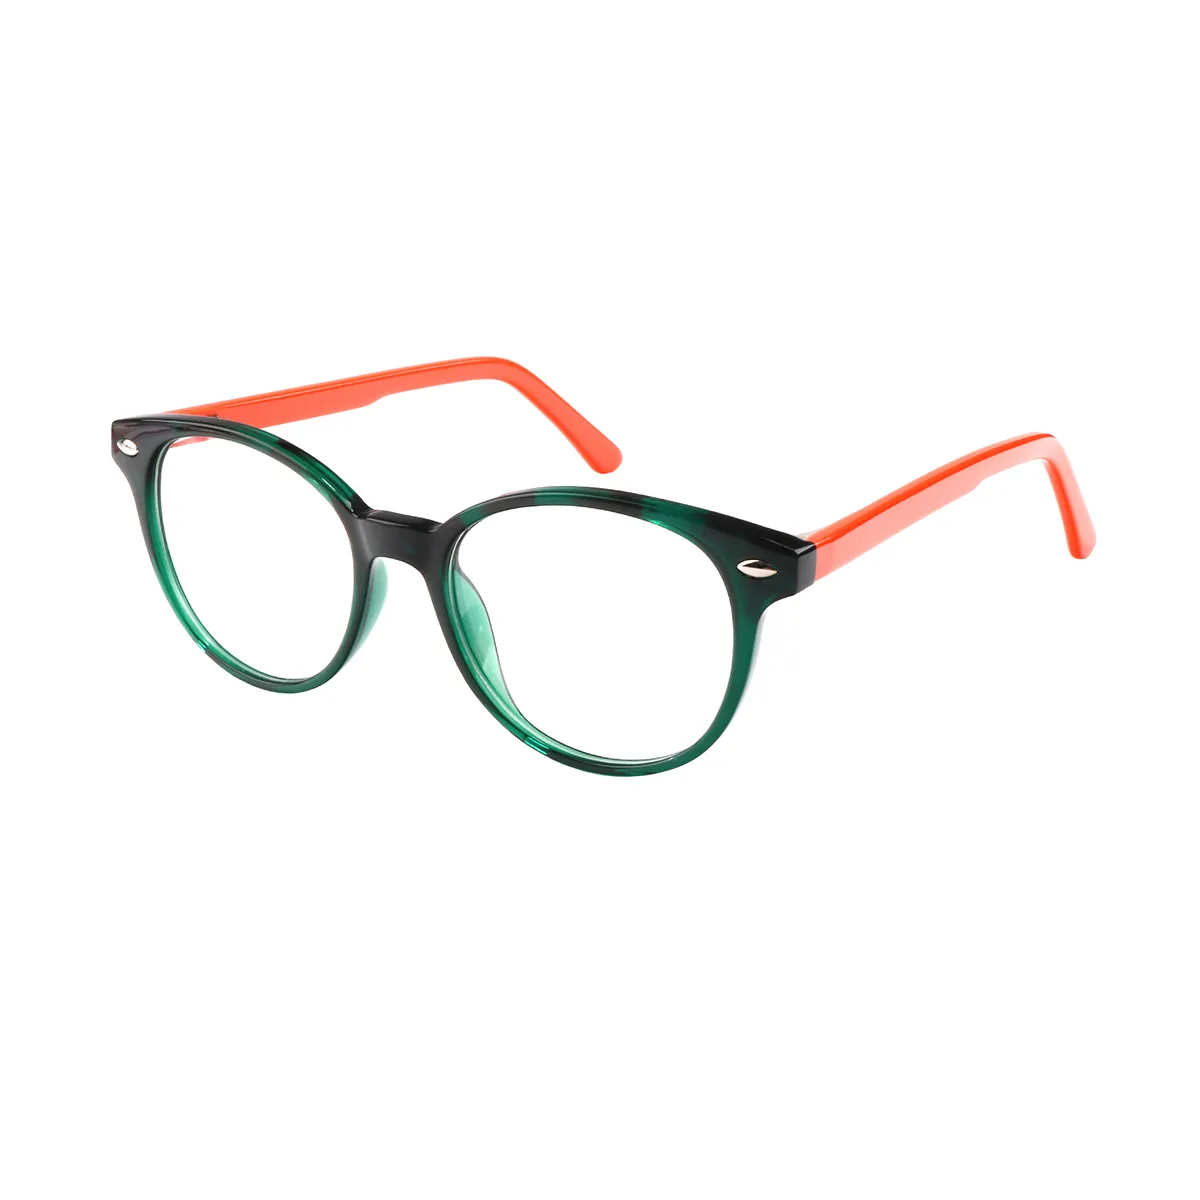 Conchita - Round Green Glasses for Women